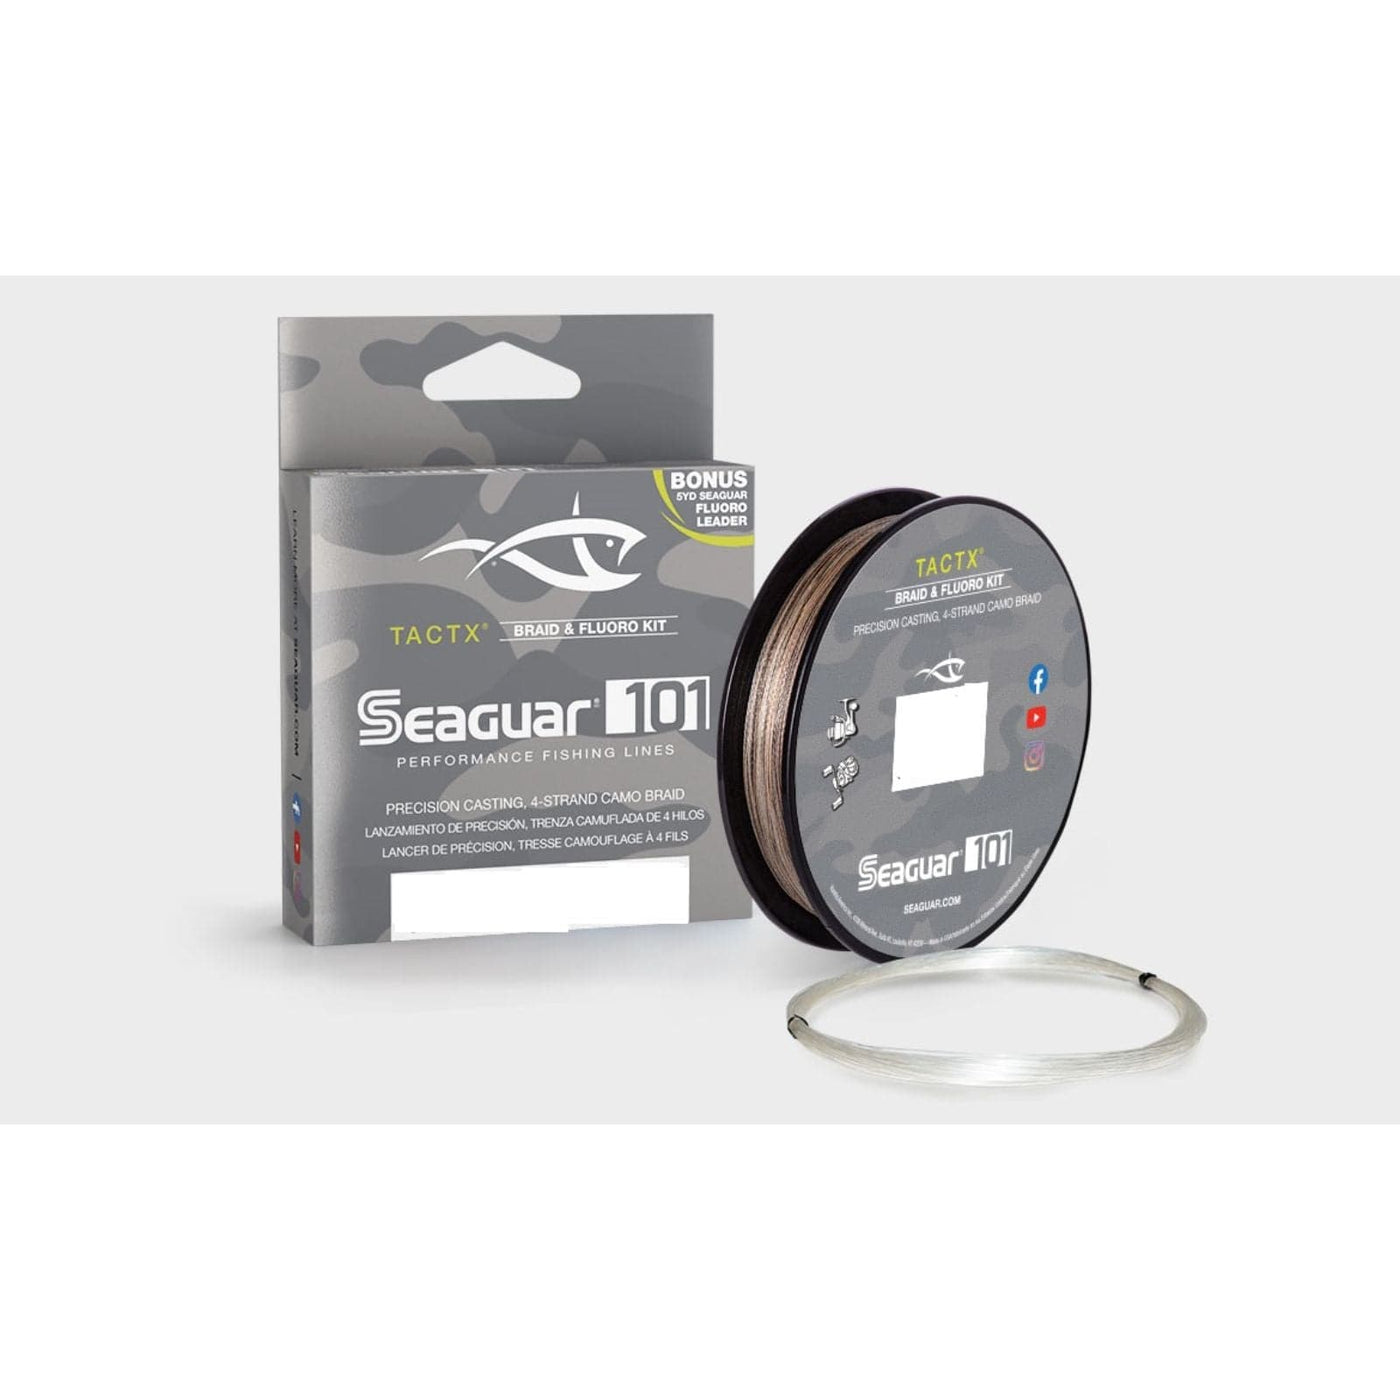 Seaguar Seaguar 101 TactX 50TCX300 Braid w Fluoro Leader 300 Yds Fishing